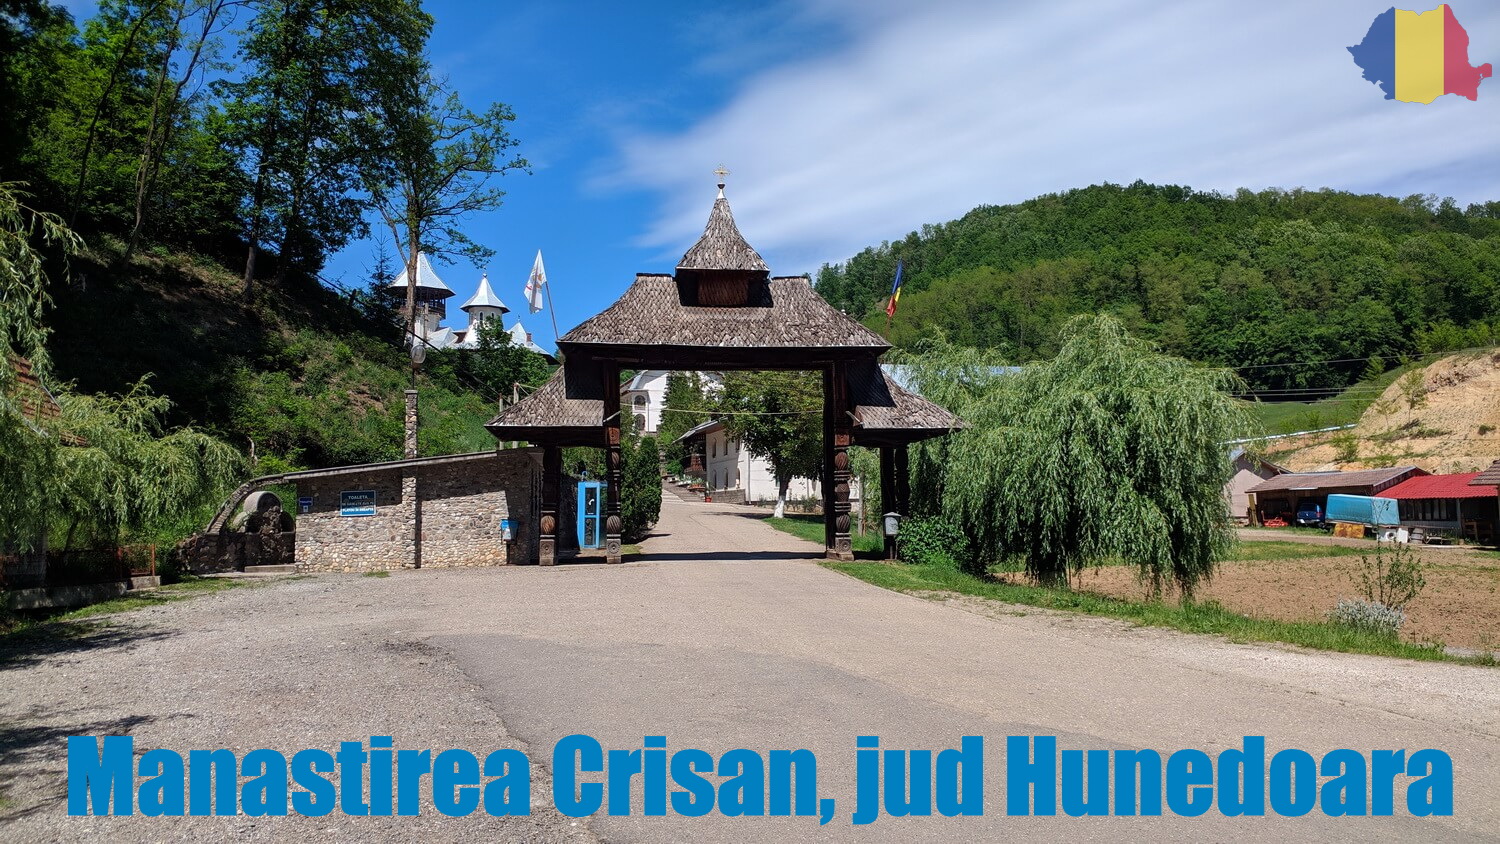 Manastirea Crisan, jud Hunedoara 2020